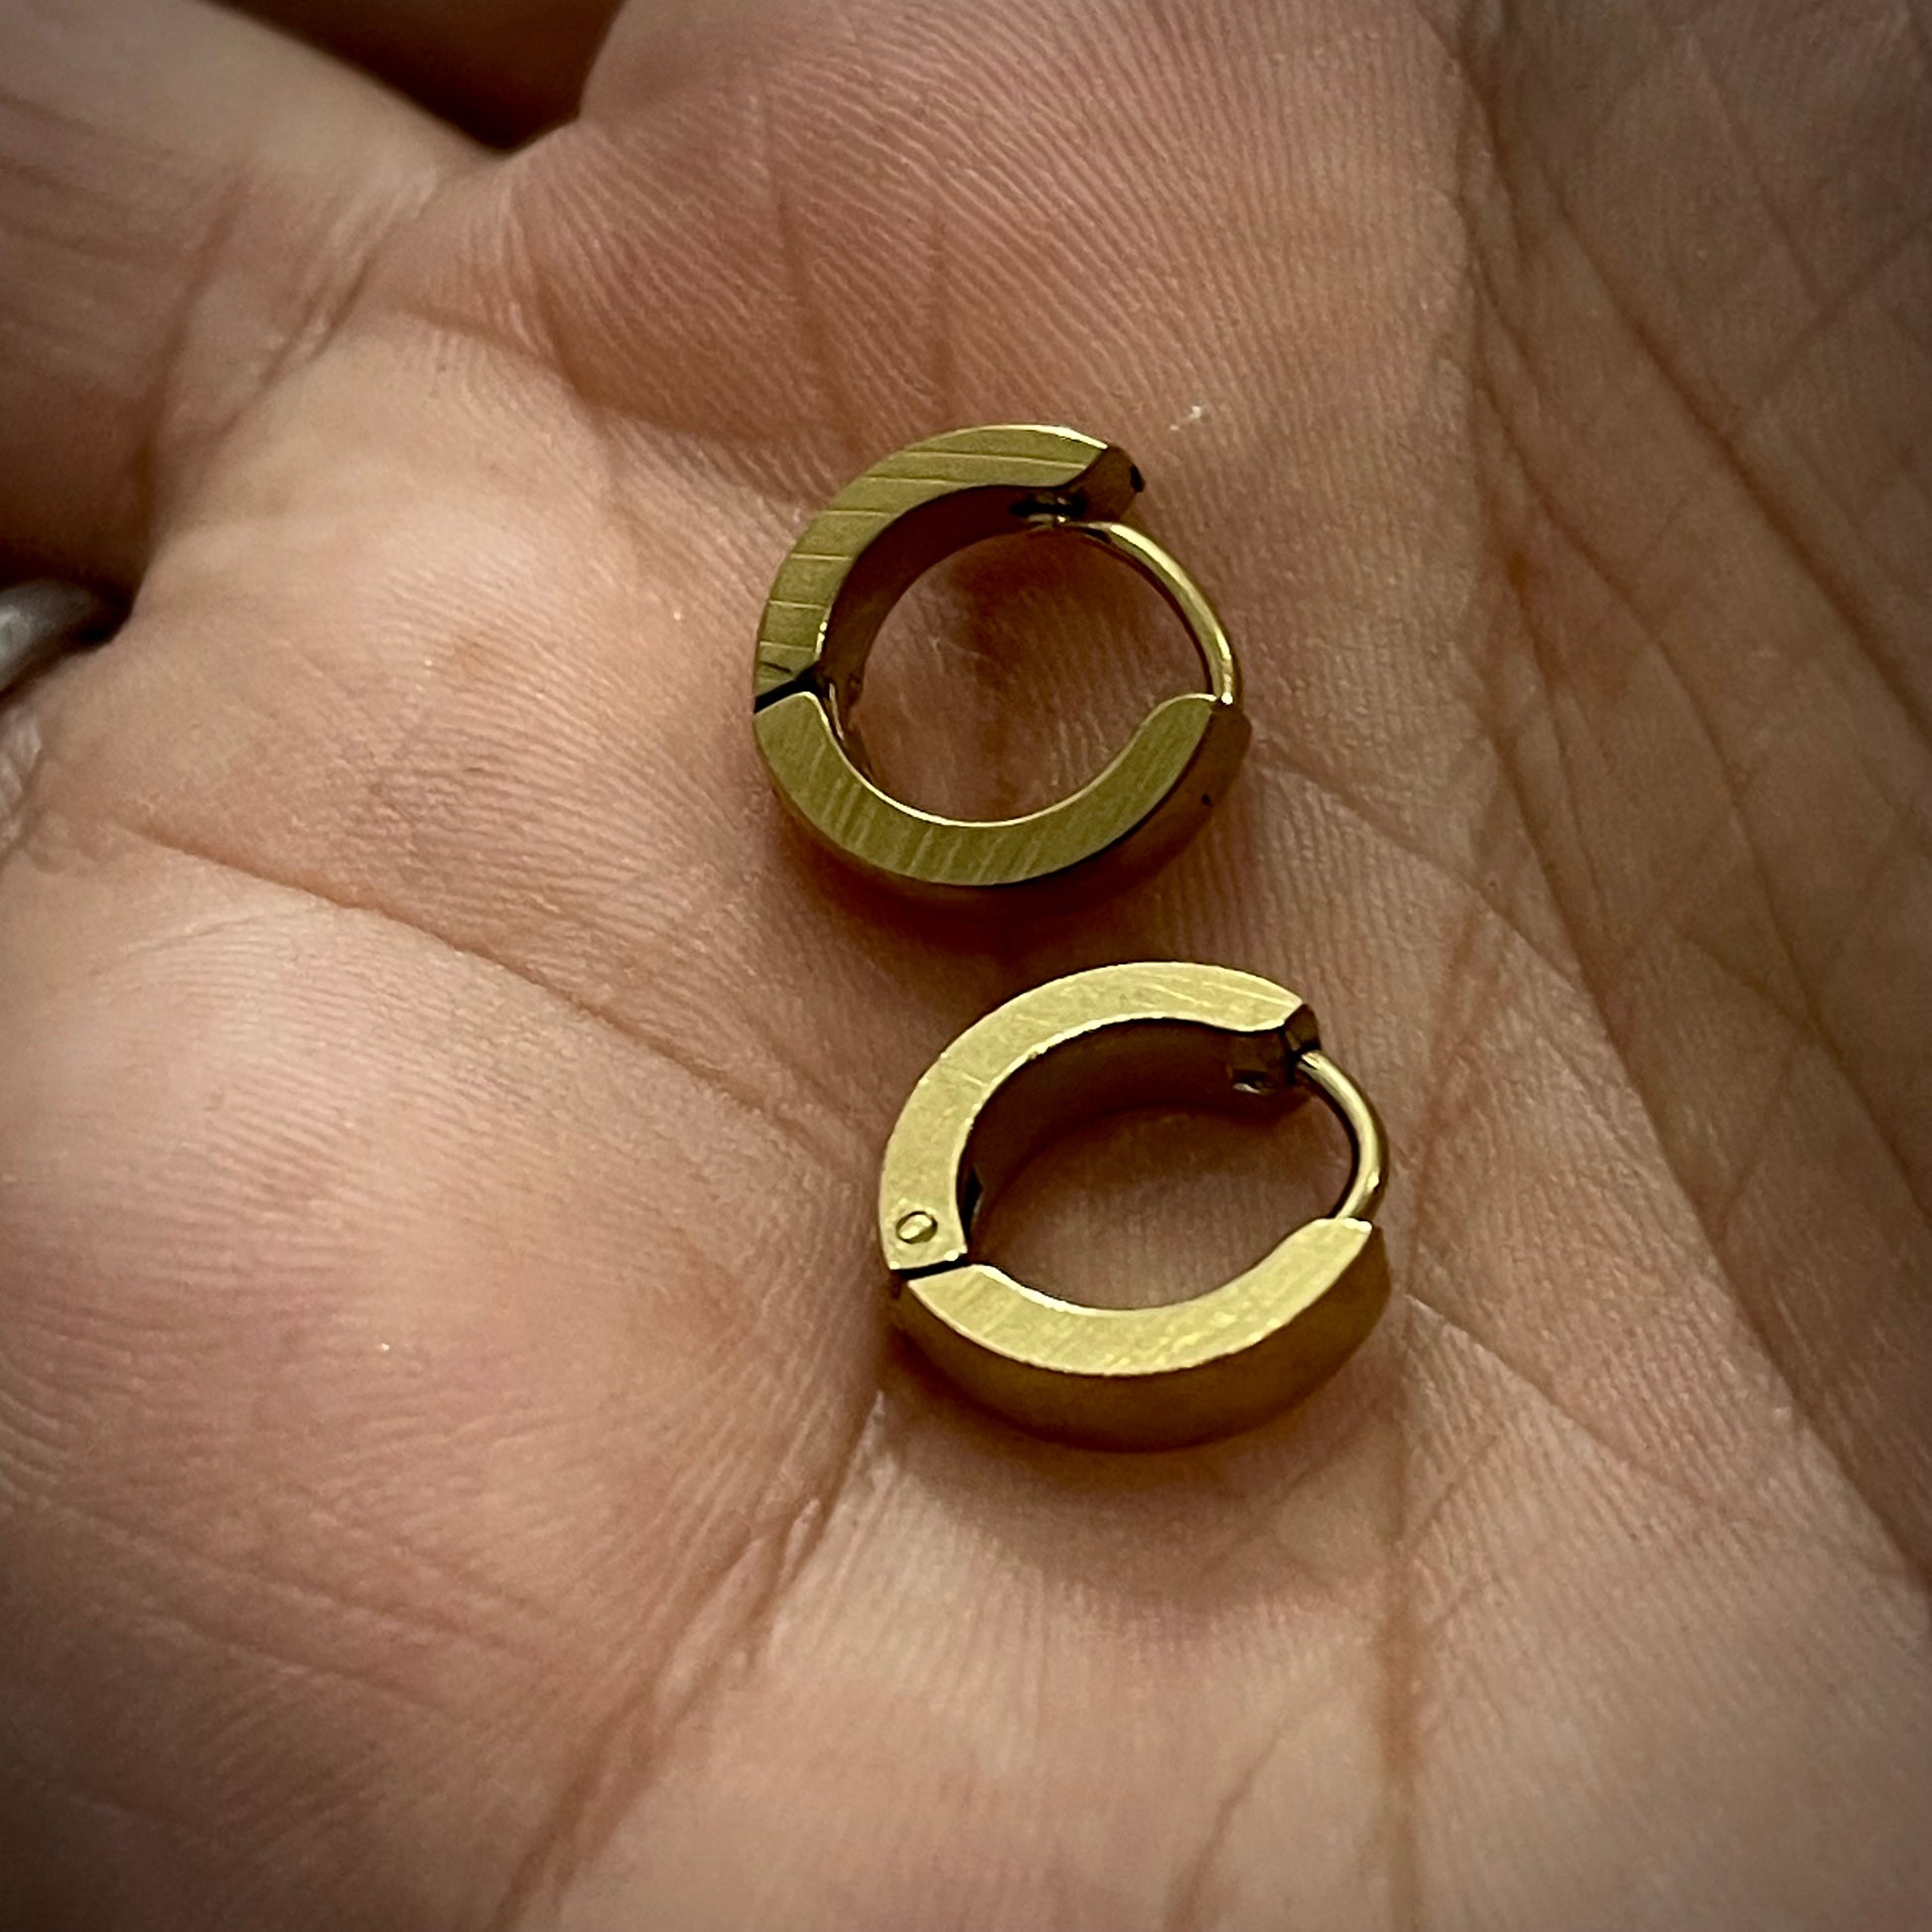 Golden Piercing Screw Bali Stud Earring For Men online in pakistan